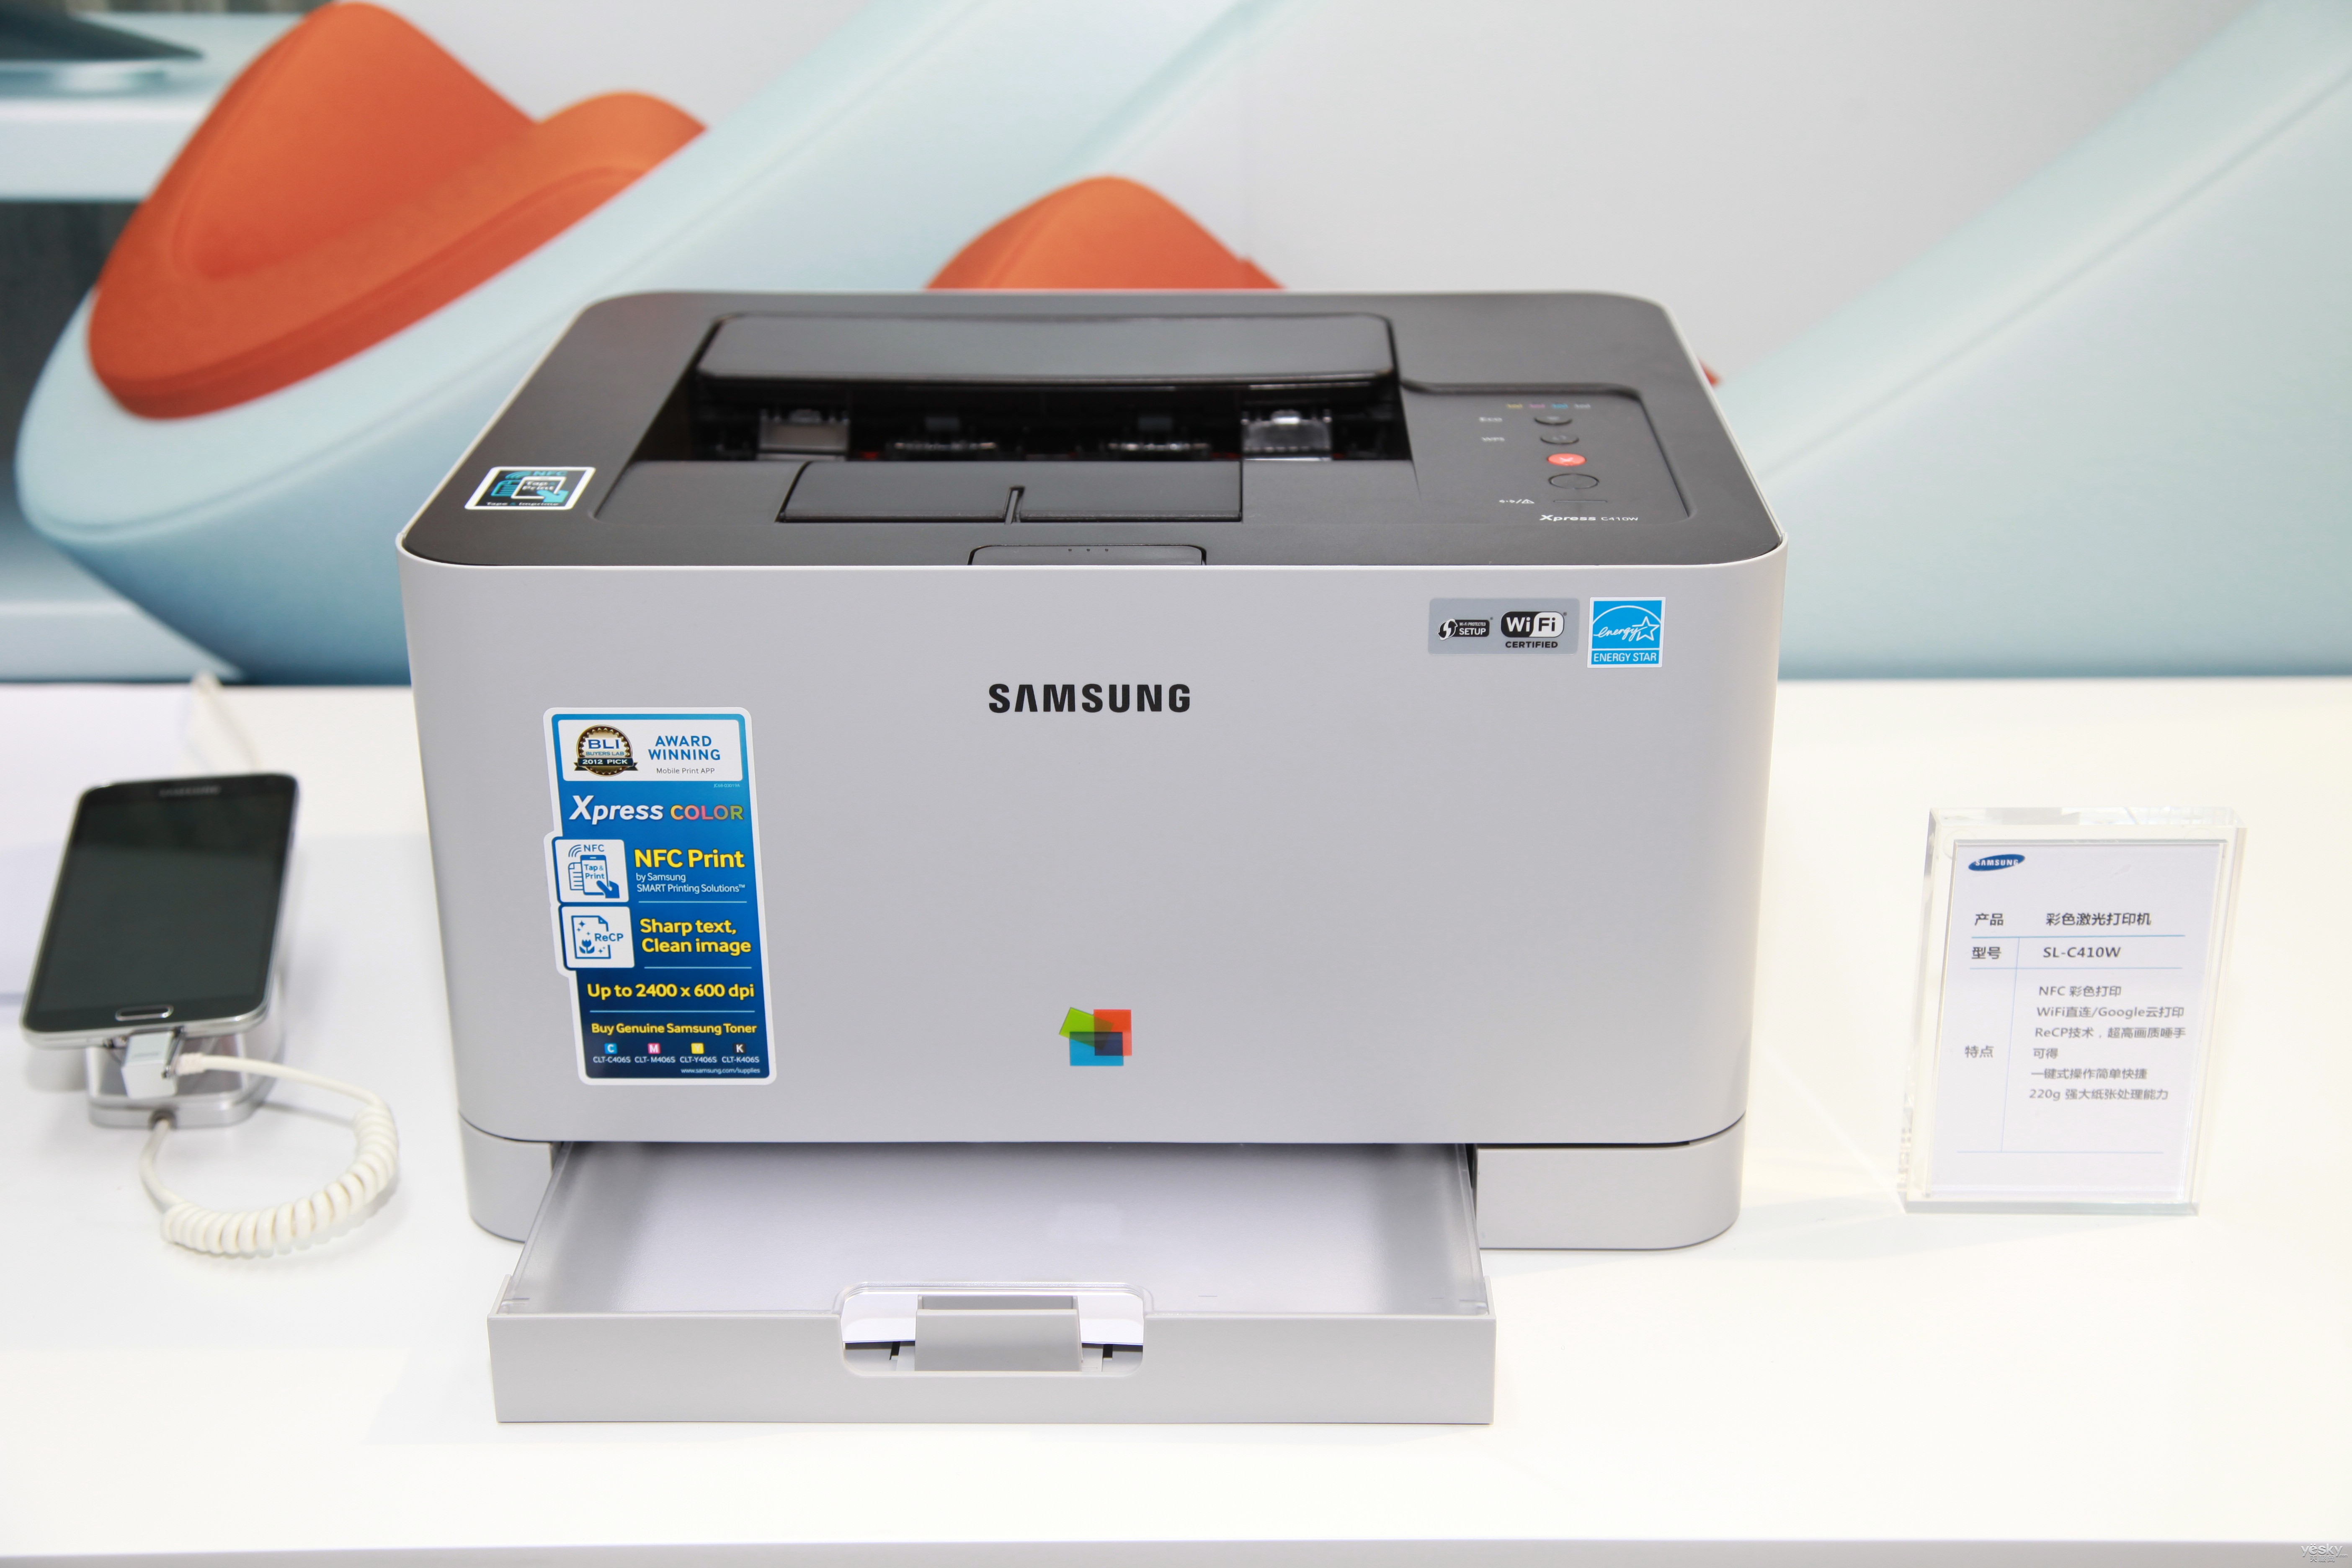 Samsung CLP-325W Laser Printer features wireless capabilities